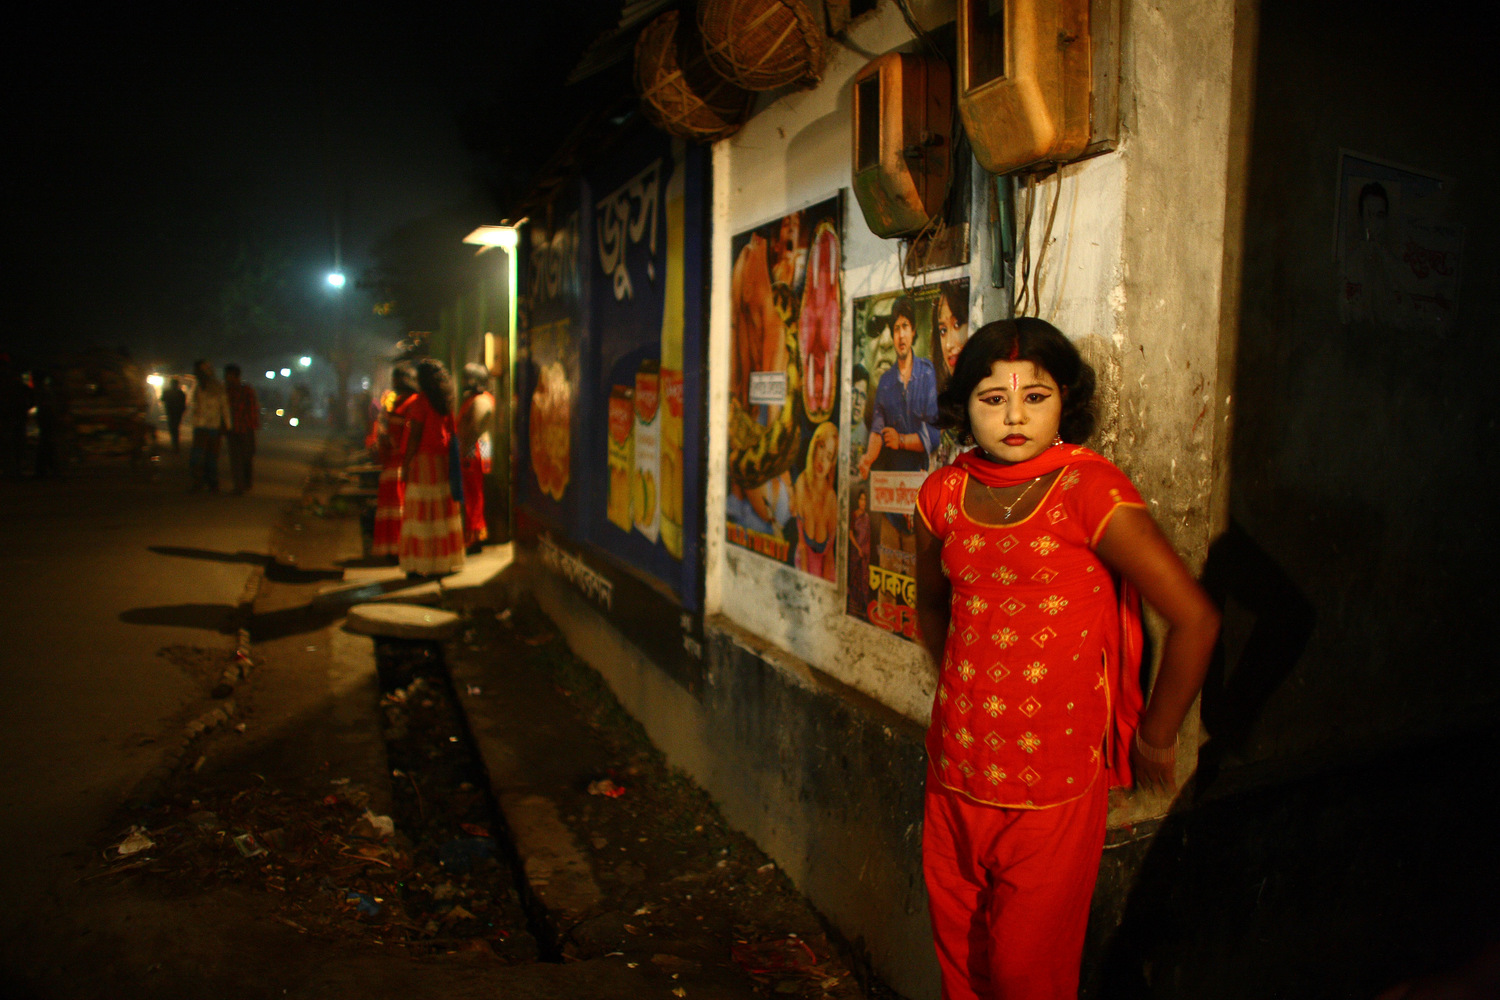  Prostitutes in Hyderabad, Pakistan